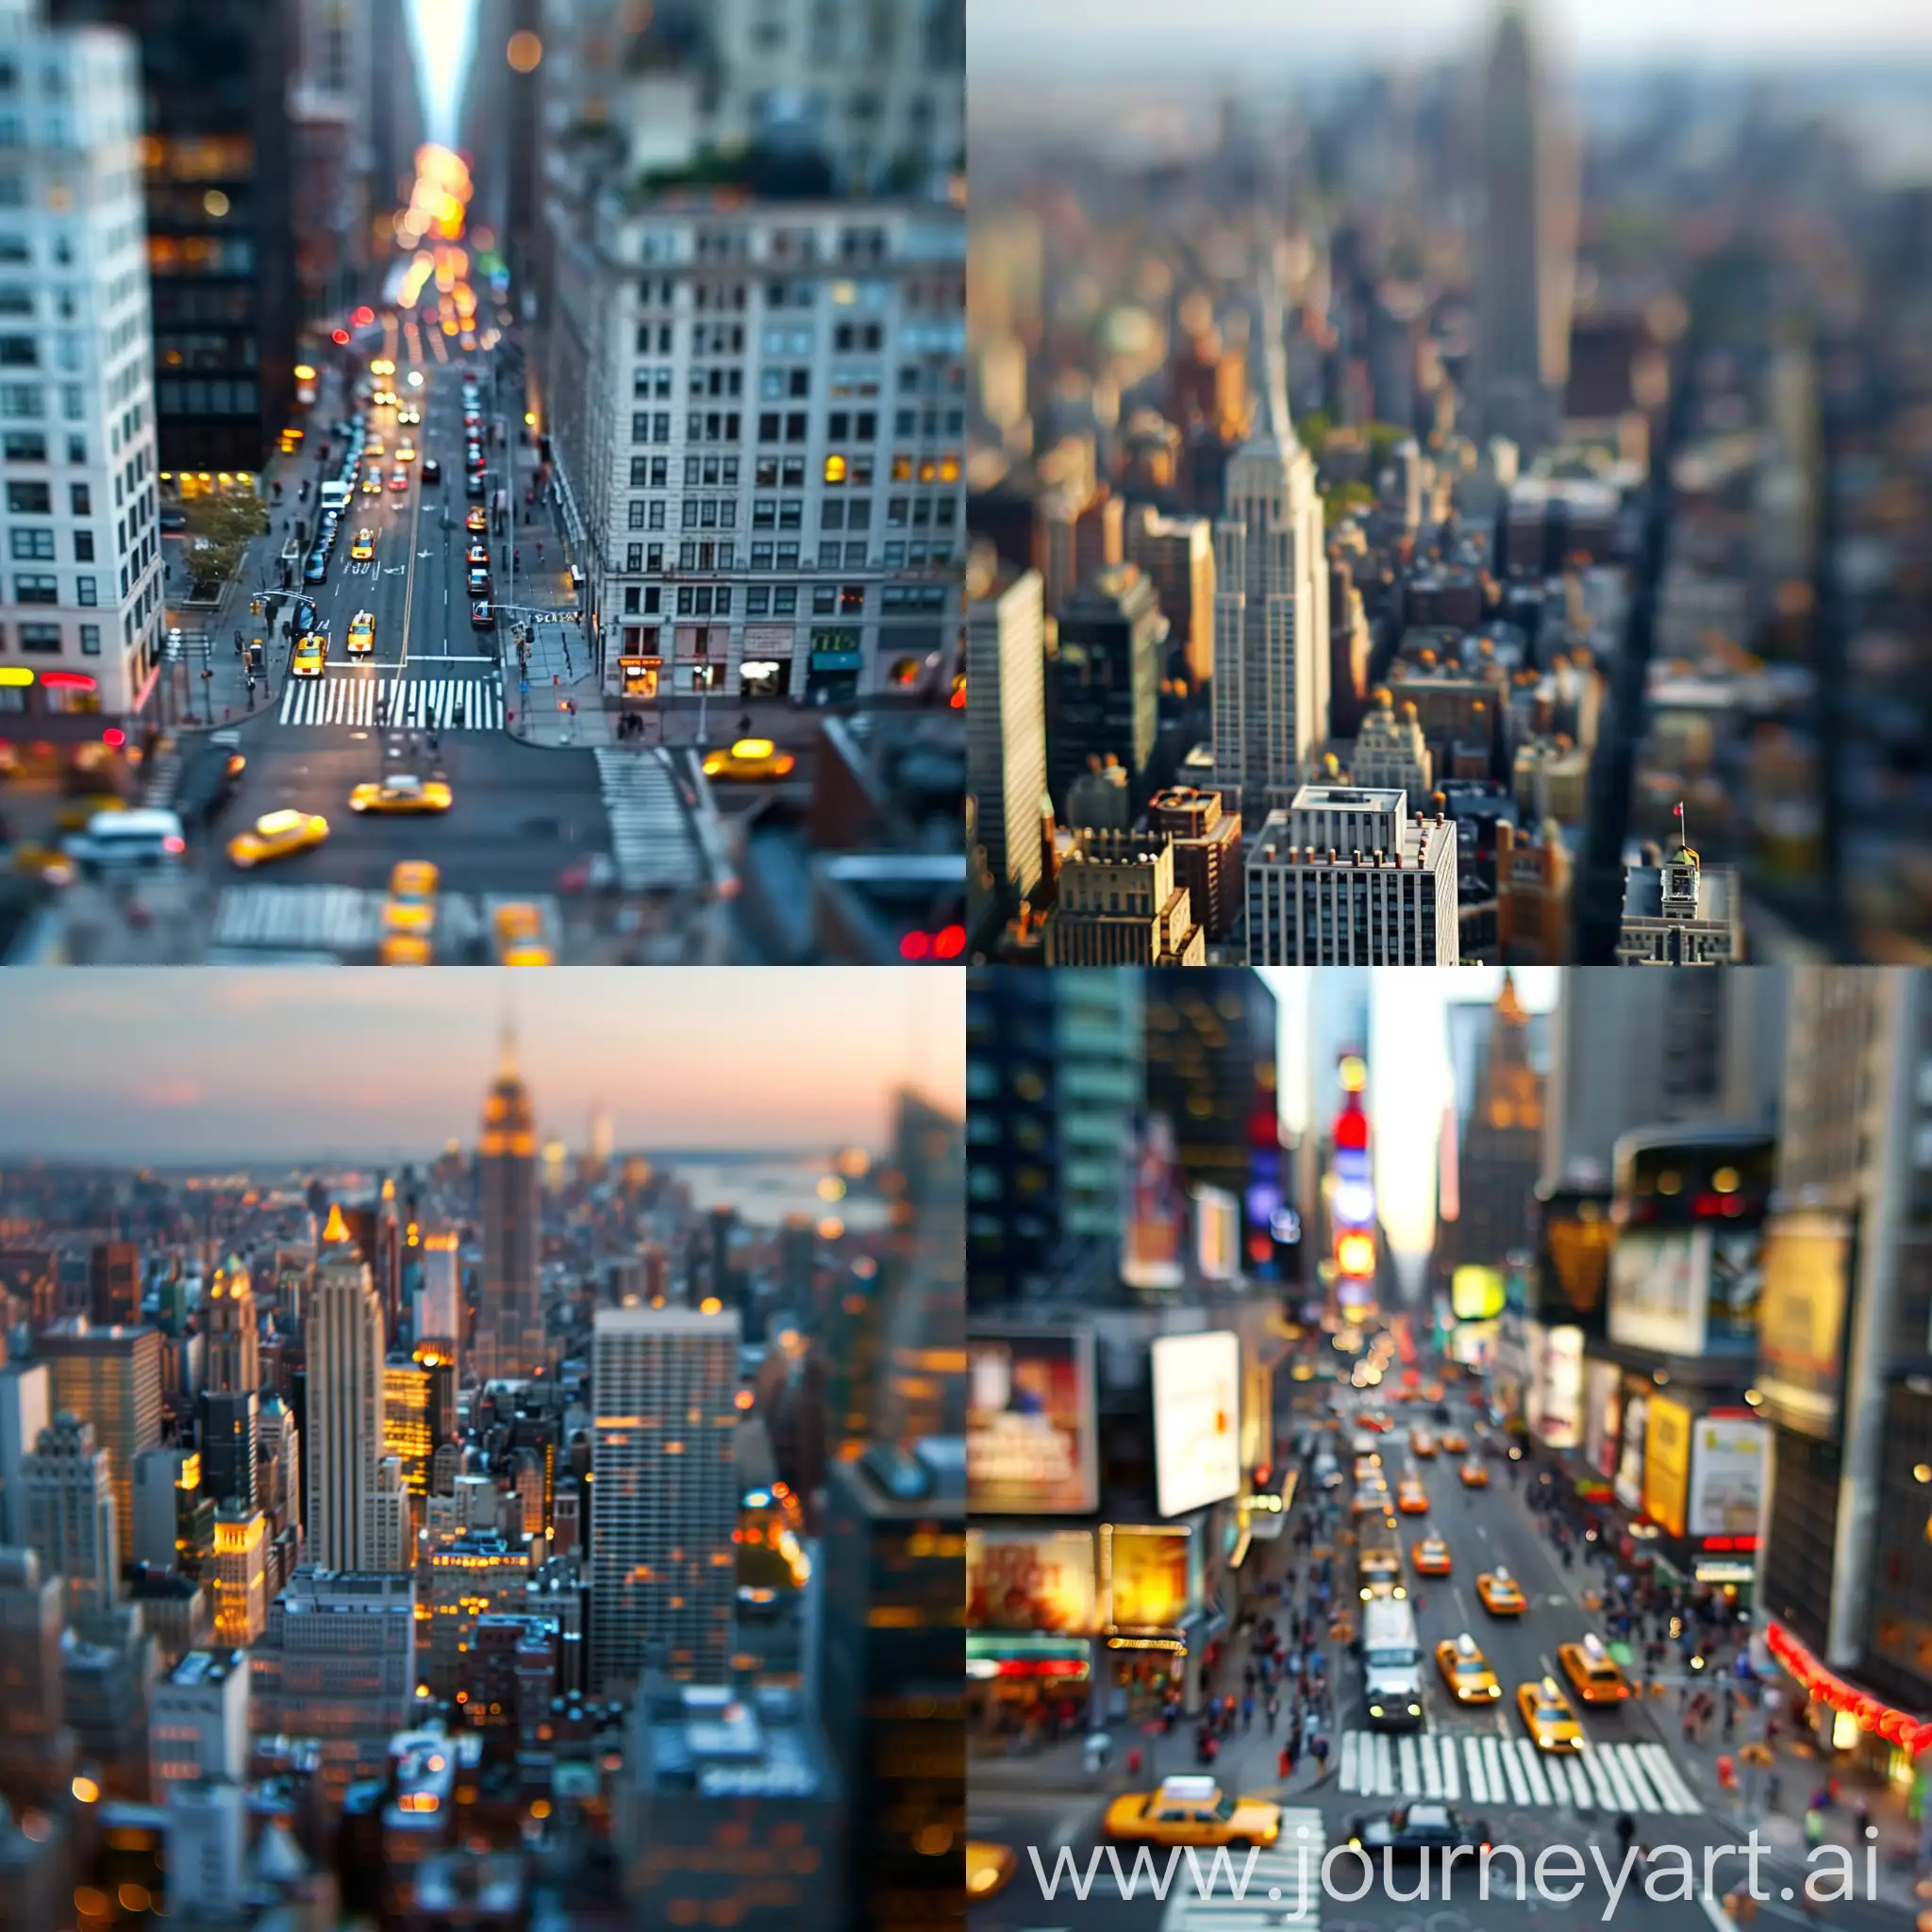 Enchanting-Miniature-City-Scenes-with-TiltShift-Blur-Photography